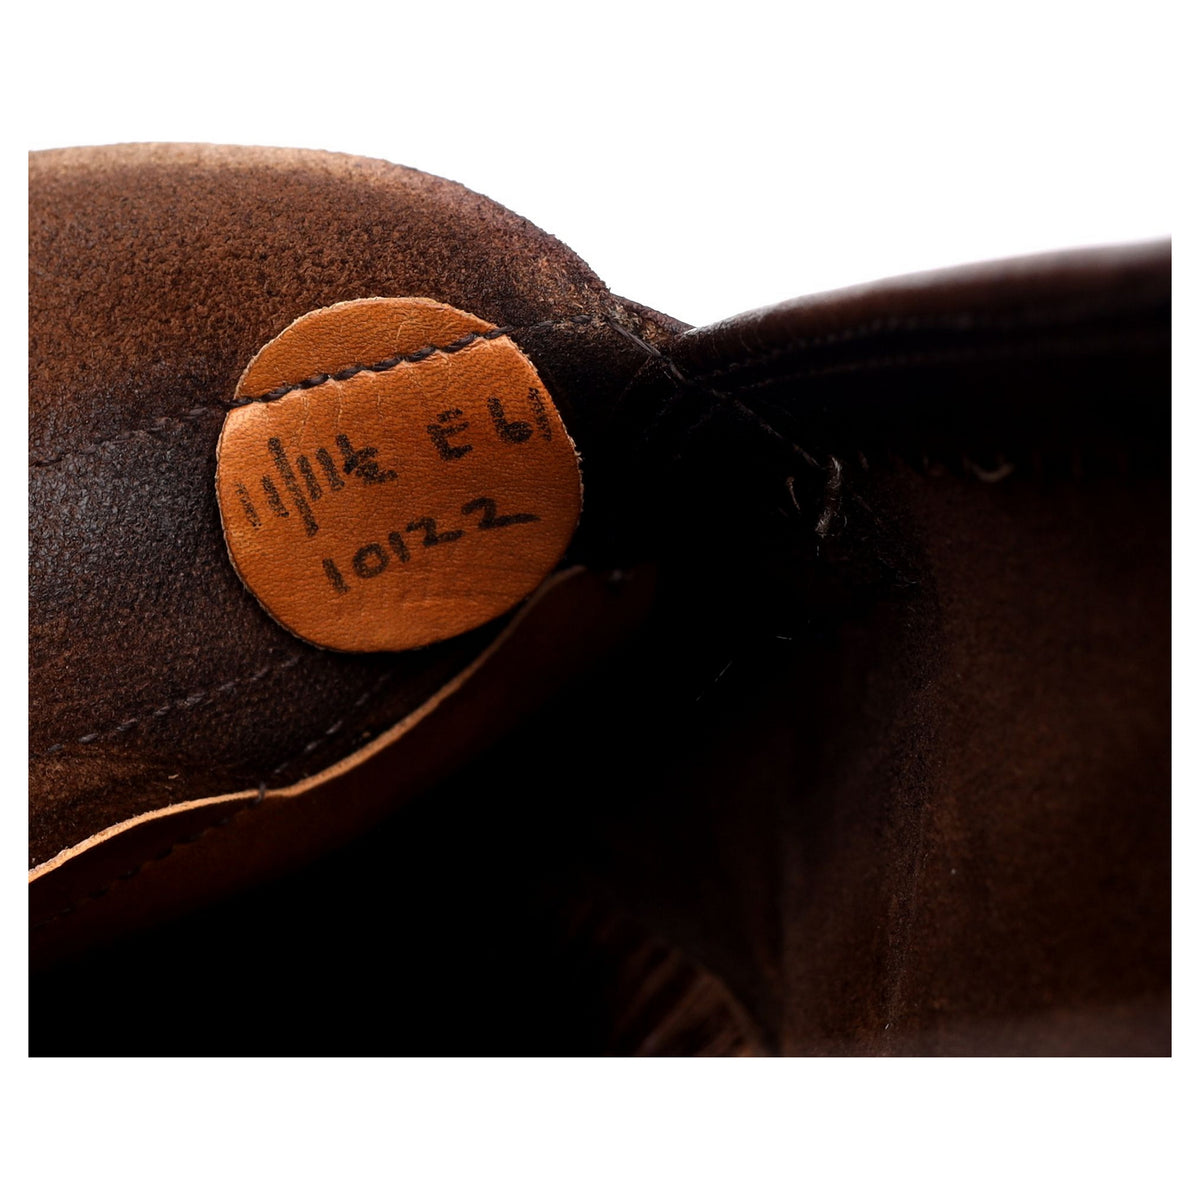 &#39;Harrow&#39; Dark Brown Leather Loafers UK 11 E